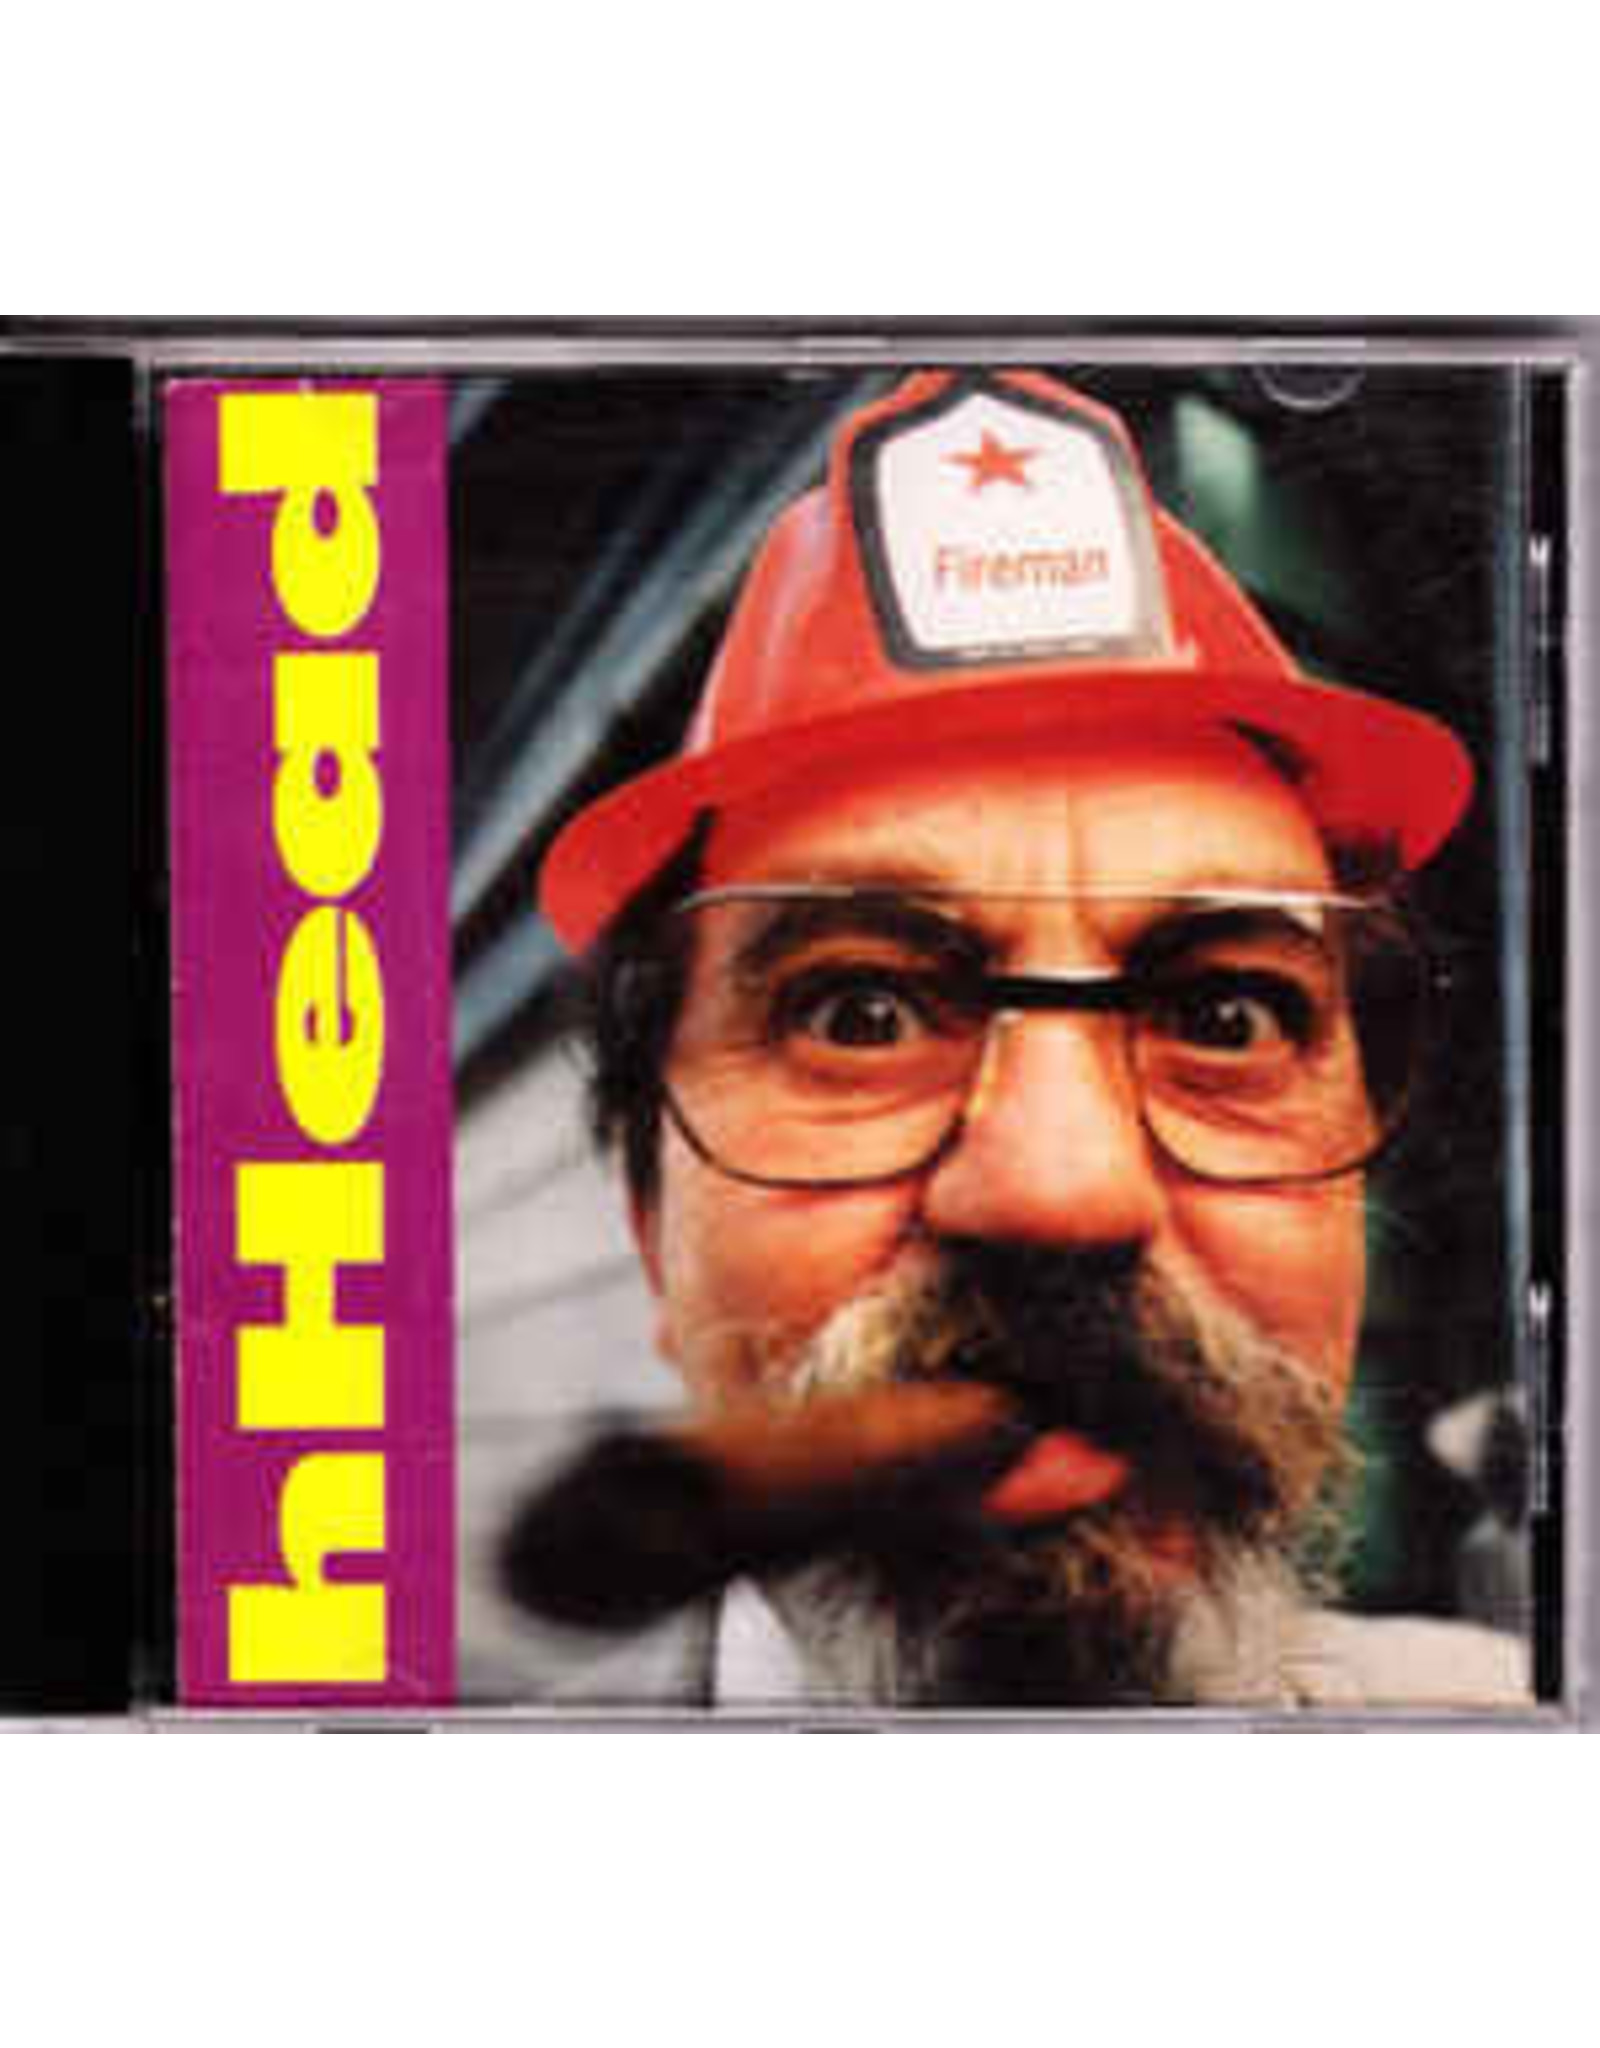 hHead - Fireman CD